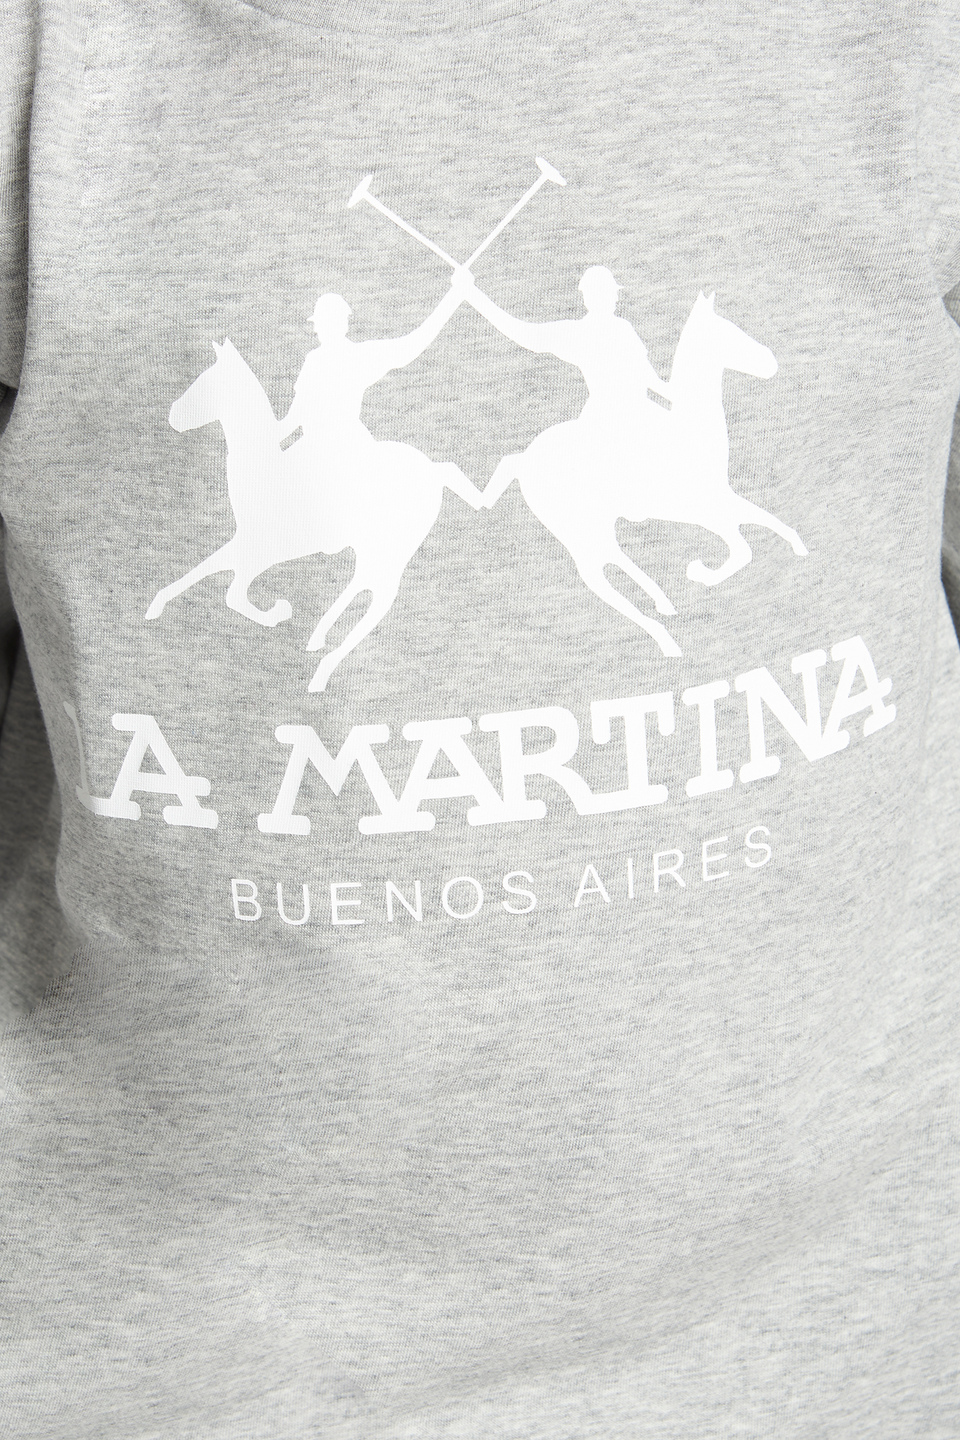 Plain-coloured long-sleeved T-shirt | La Martina - Official Online Shop